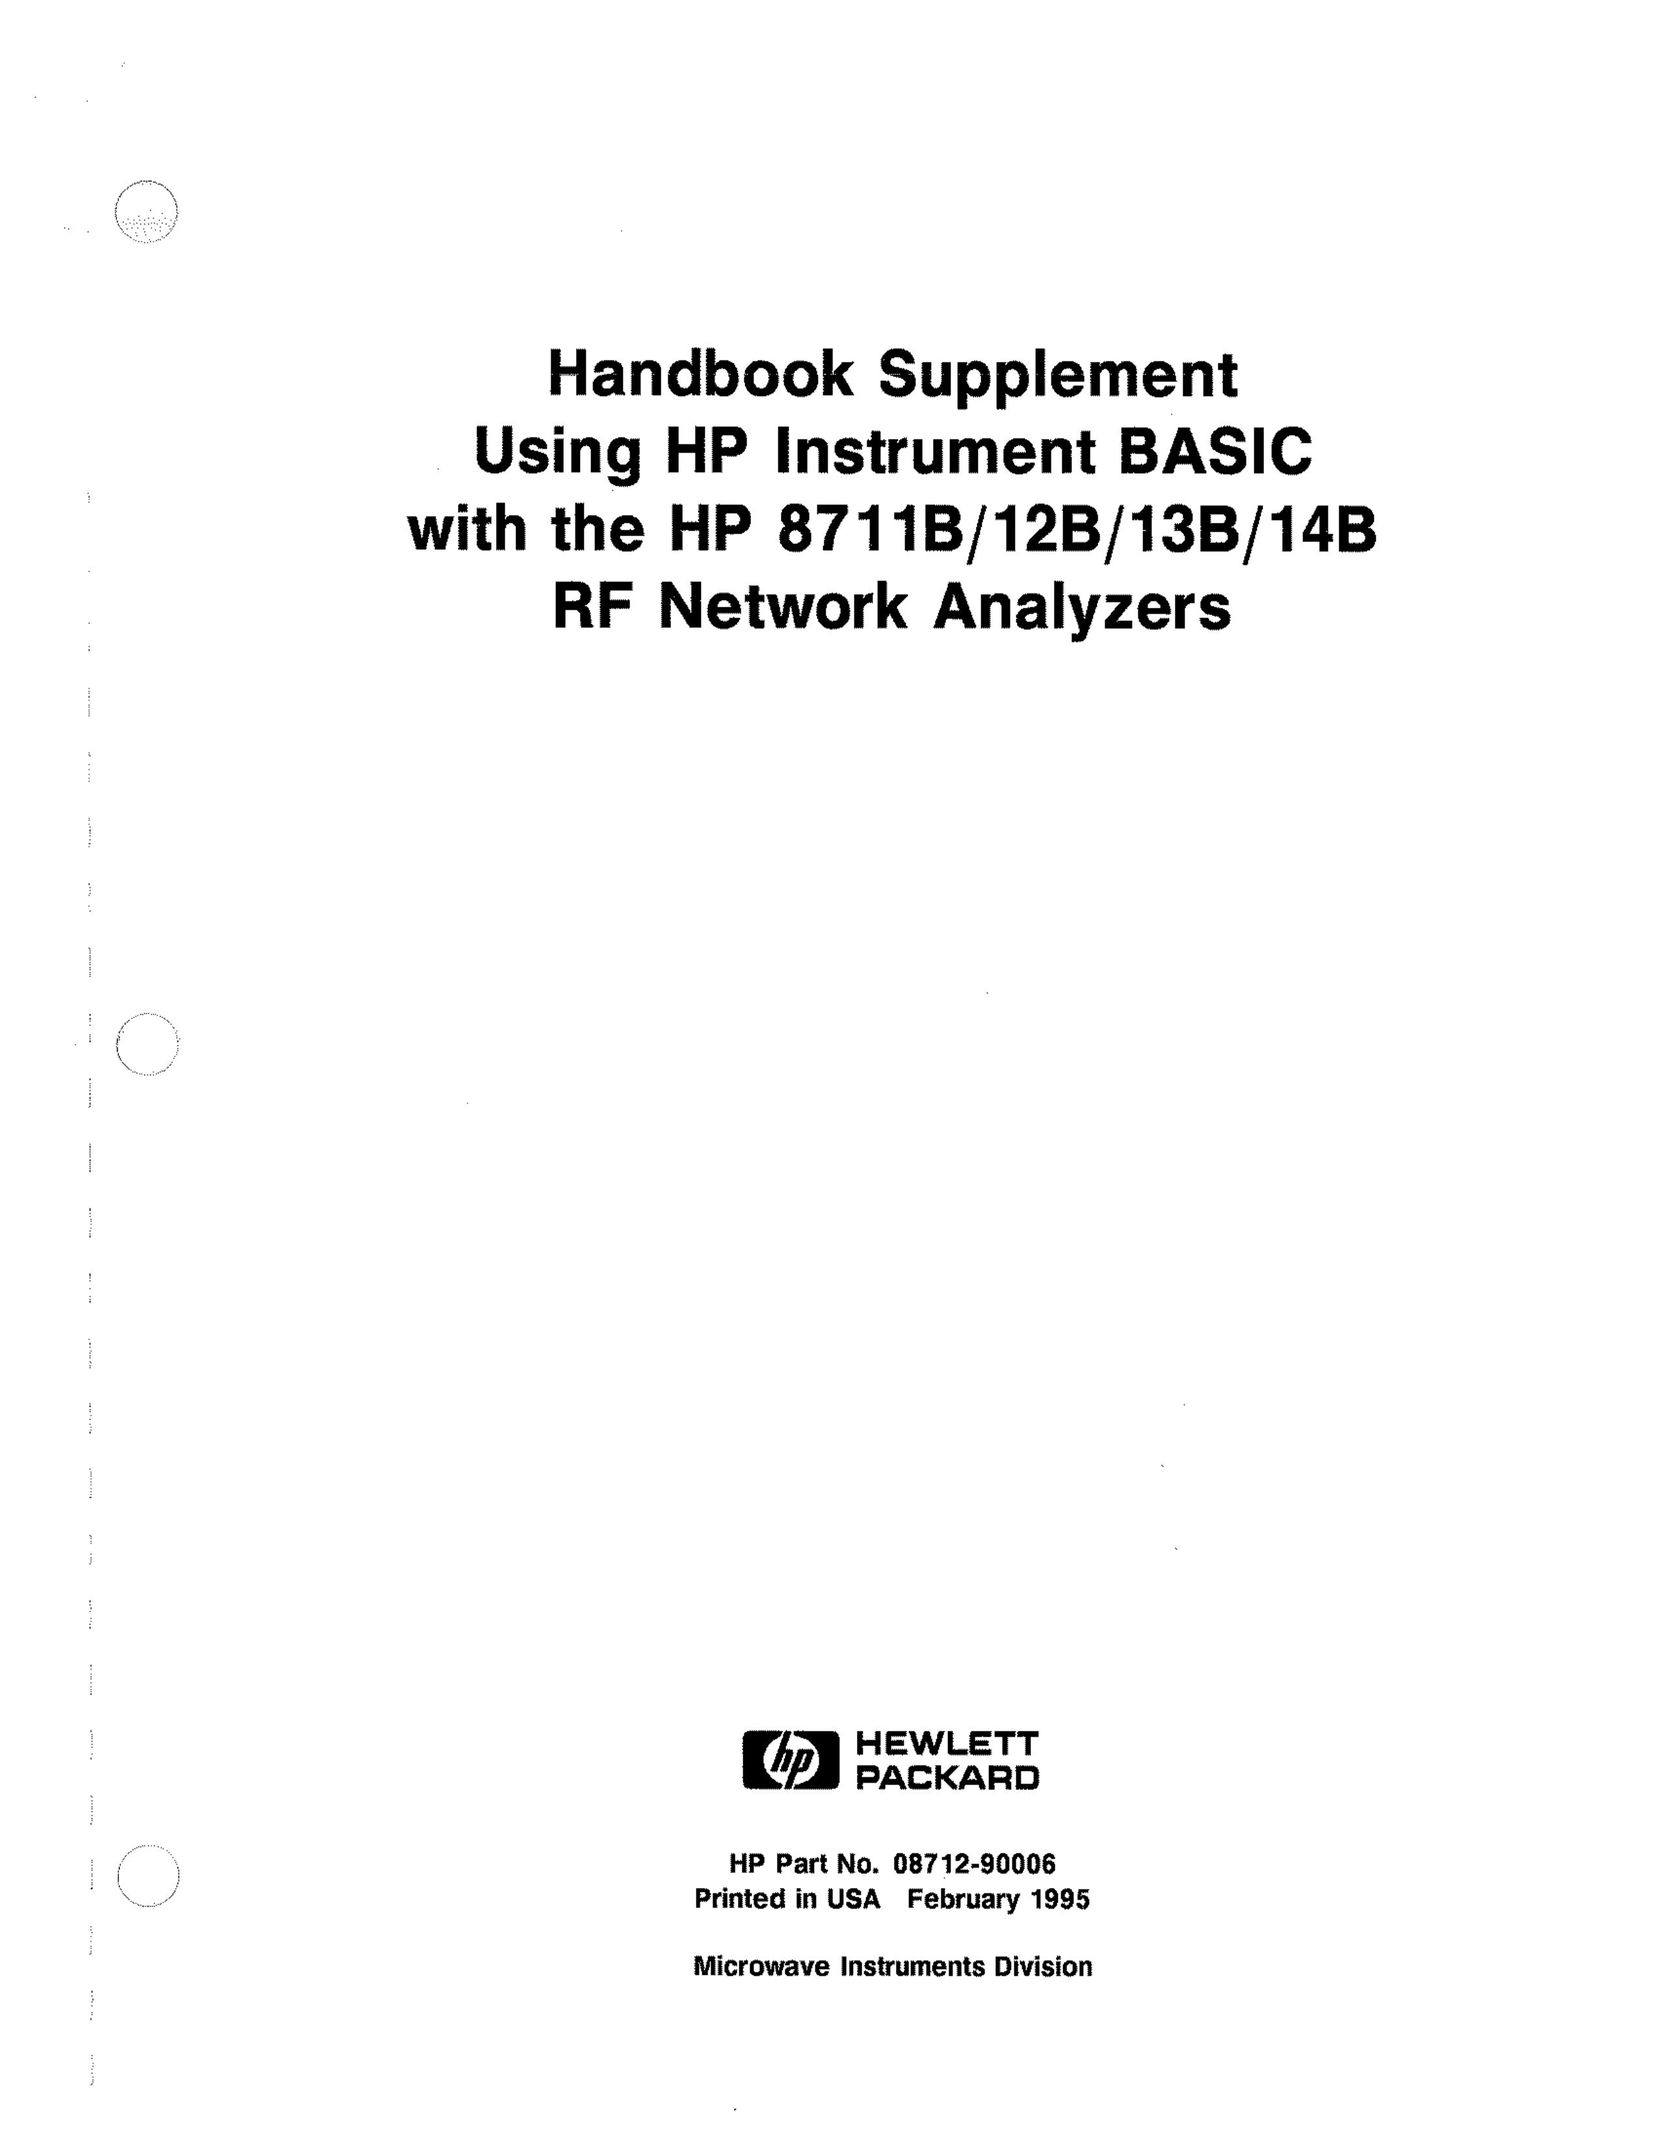 HP (Hewlett-Packard) 13B Video Gaming Accessories User Manual